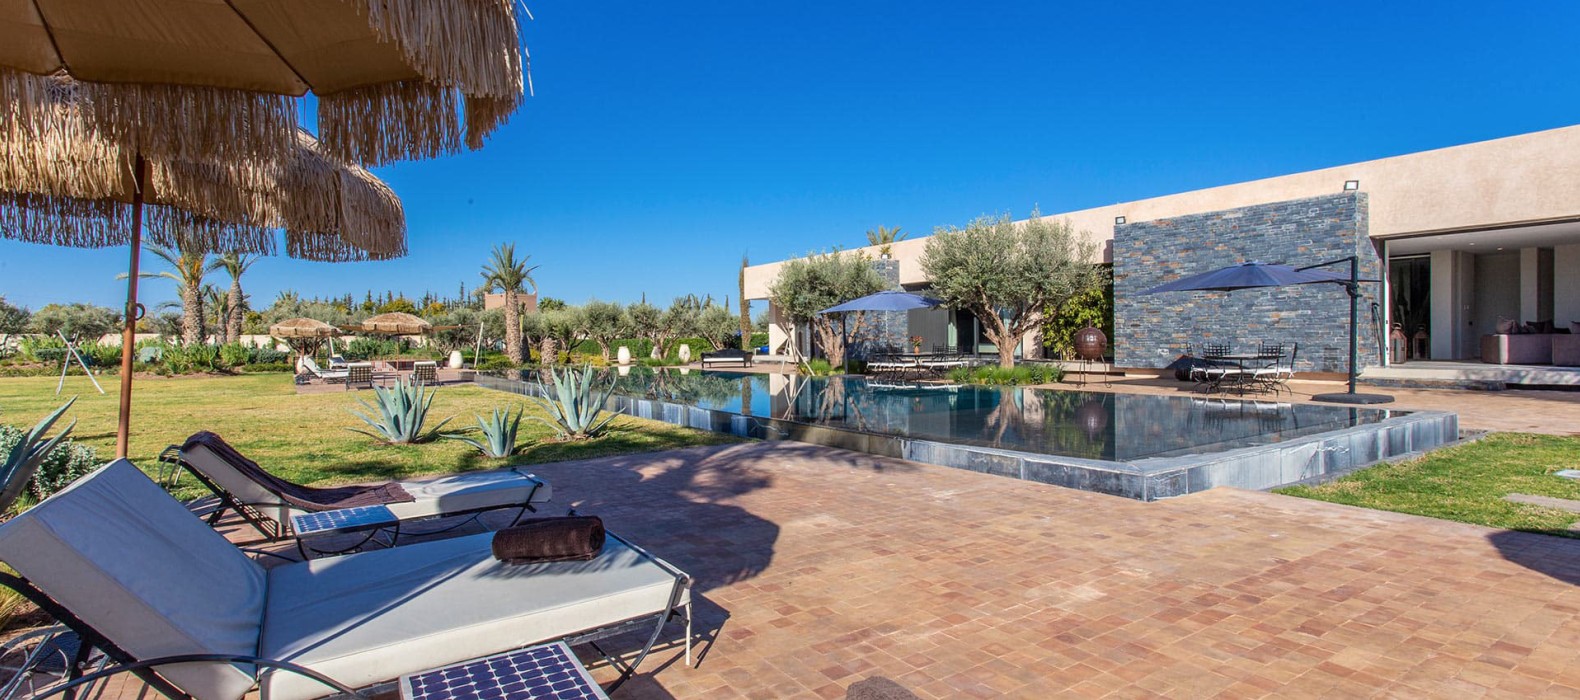 Pool area with sun loungers of Villa Yasmina in Marrakech